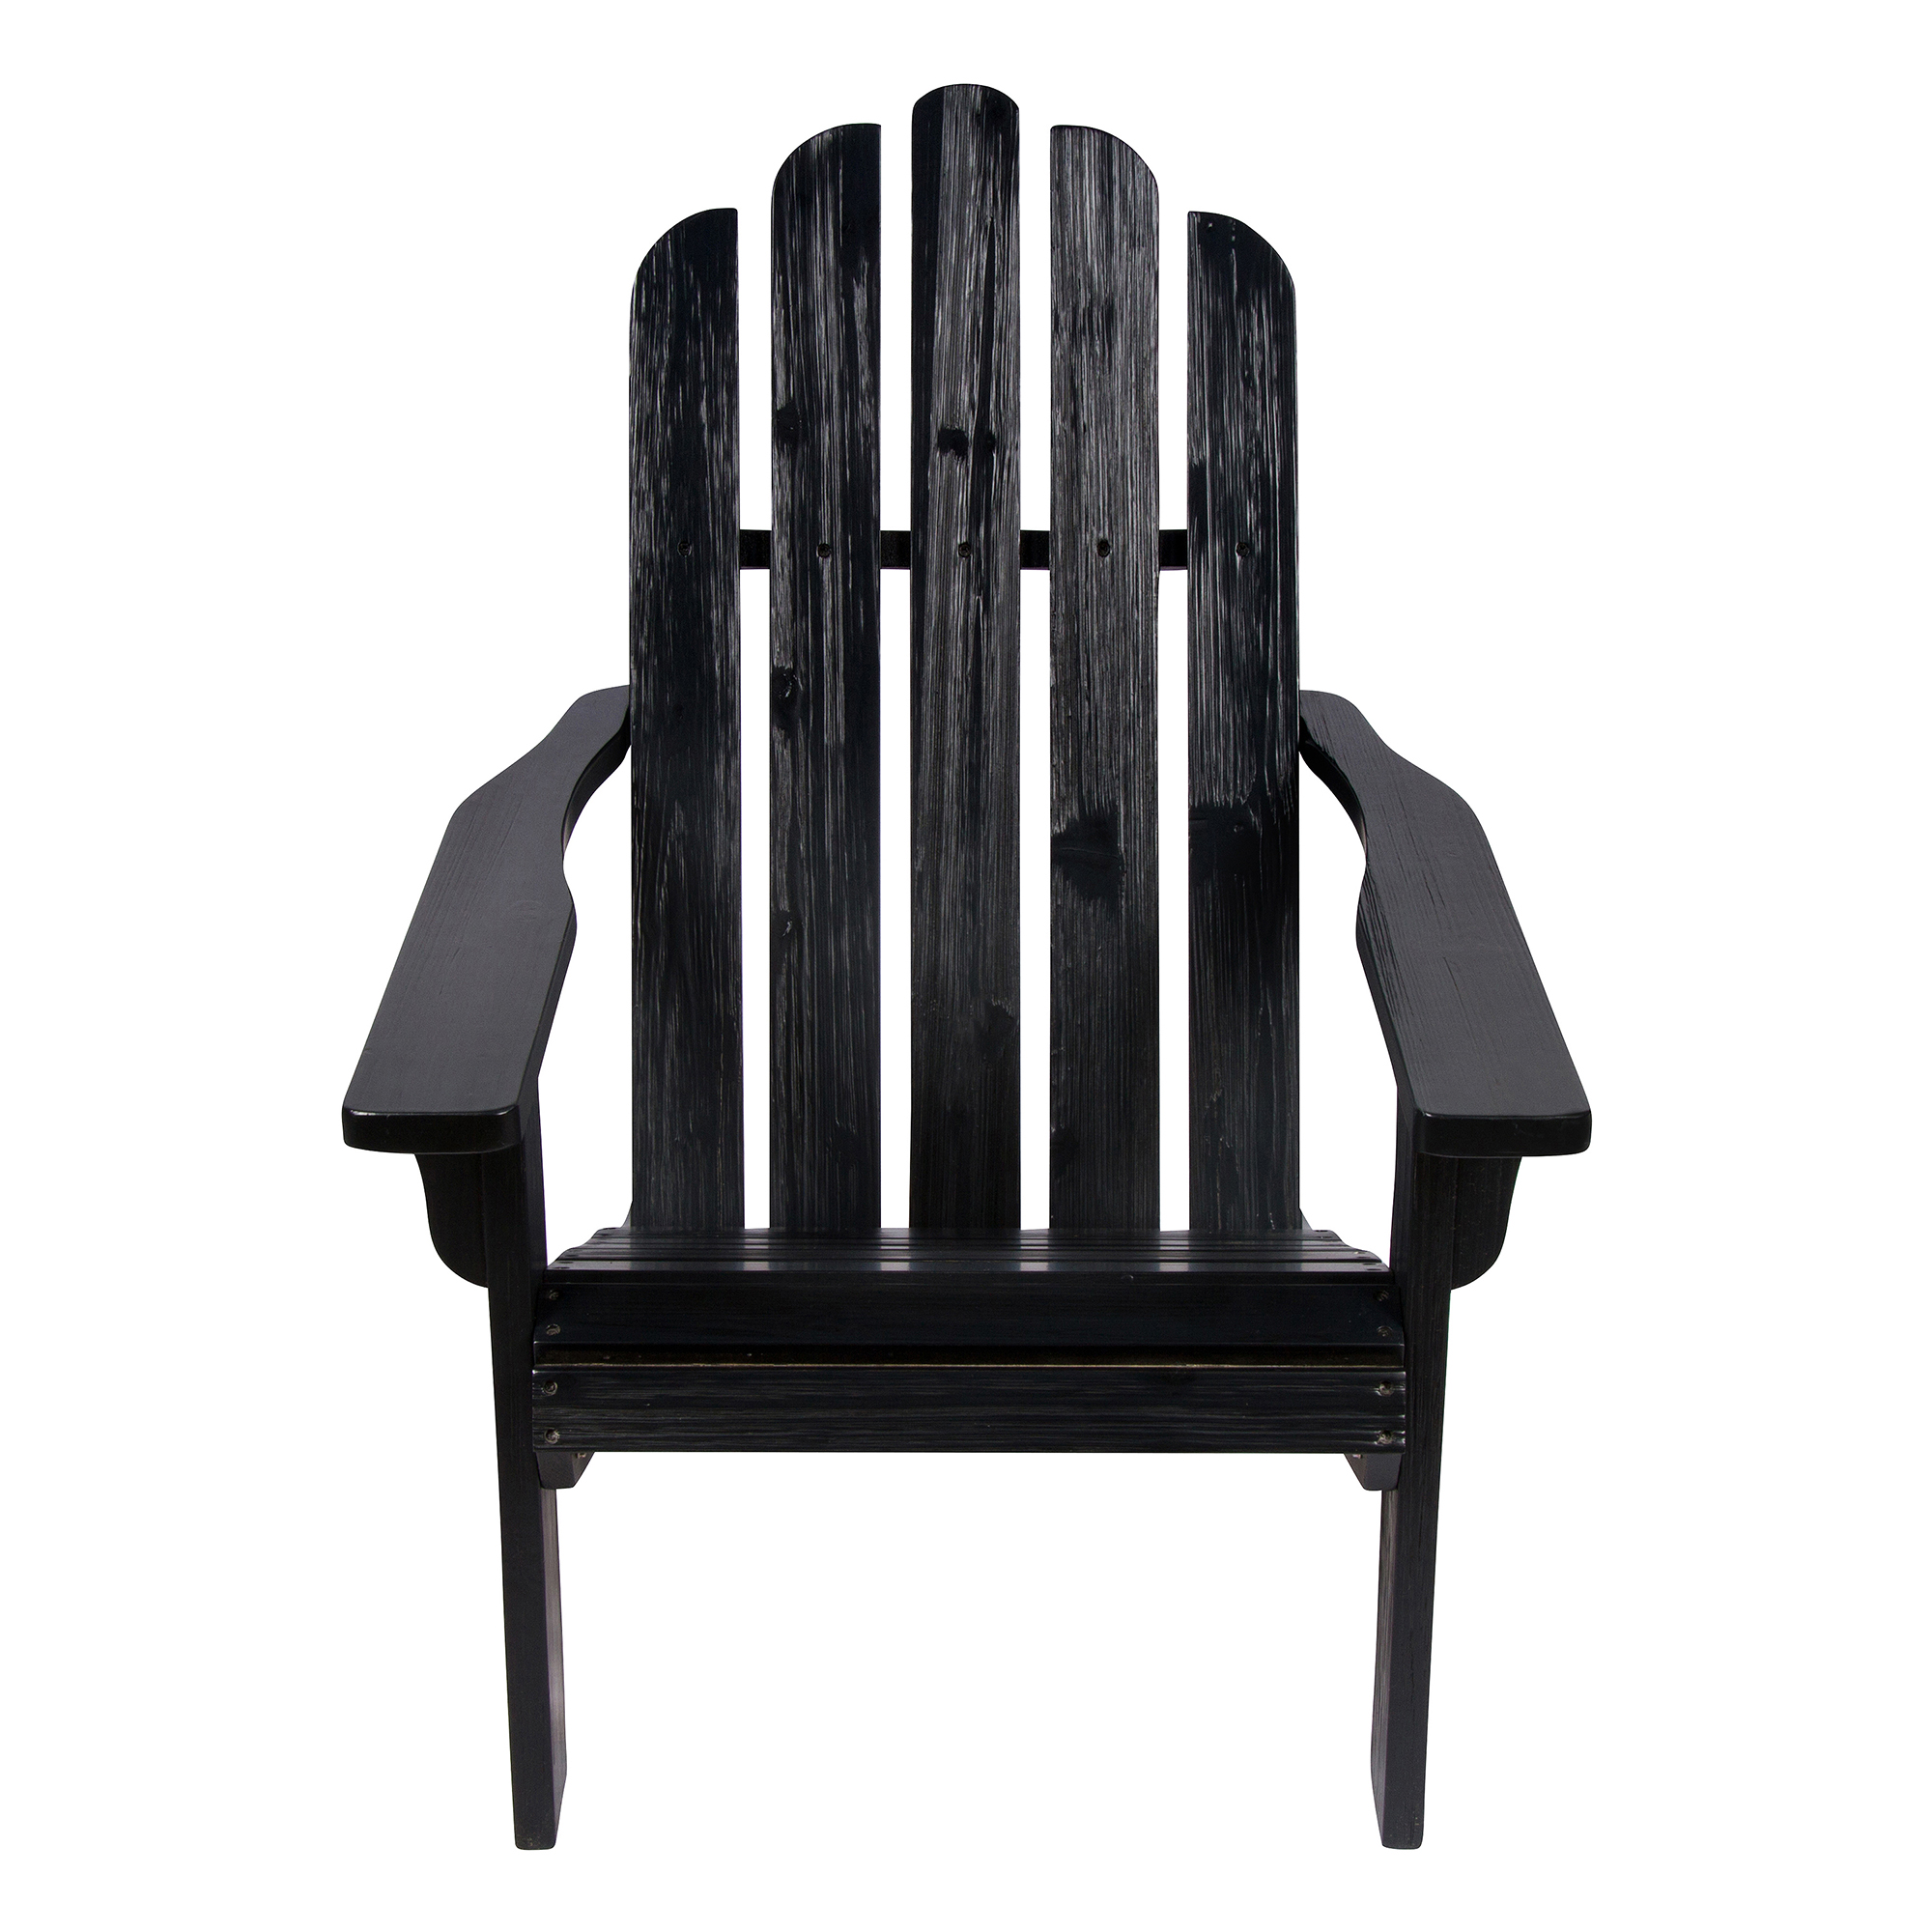 Shine Company Marina II Solid Wood Adirondack Chair, Black - image 2 of 7